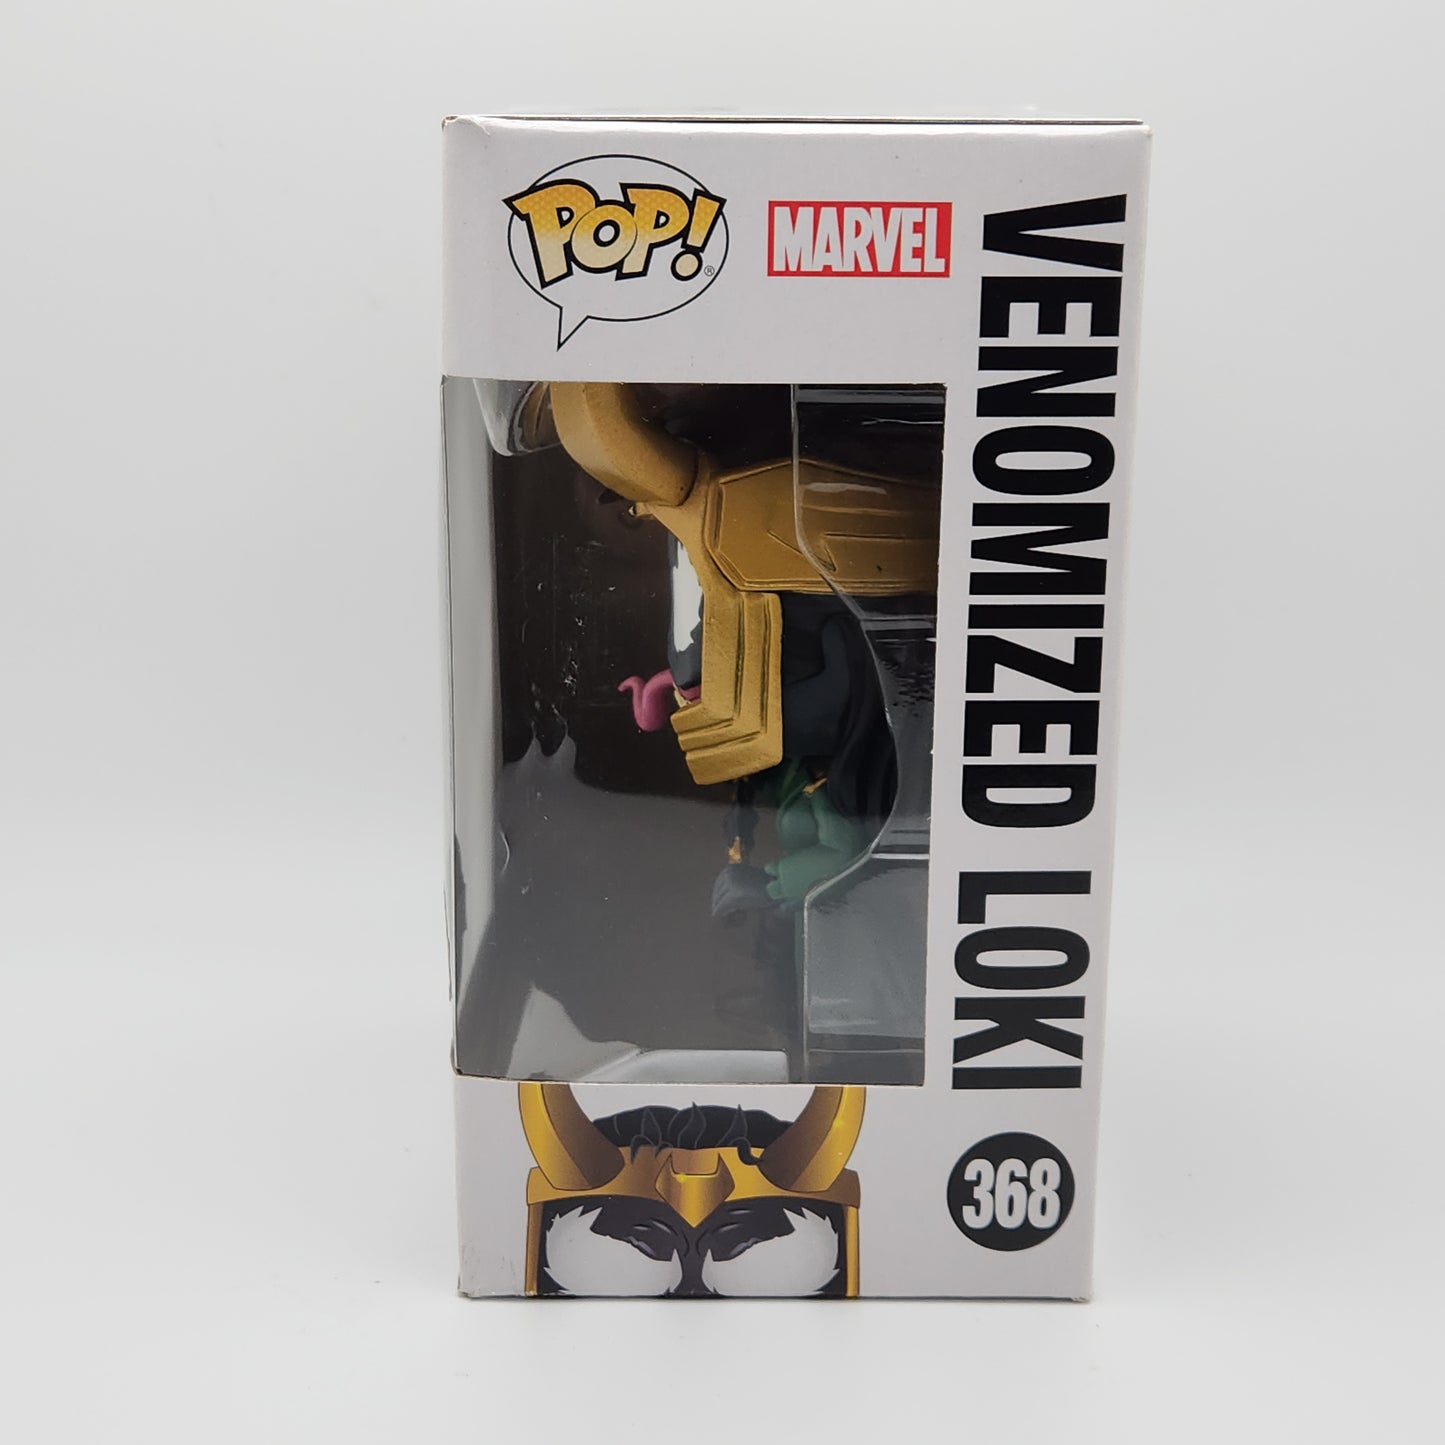 Funko Pop! Marvel- Venom: Venomized Loki